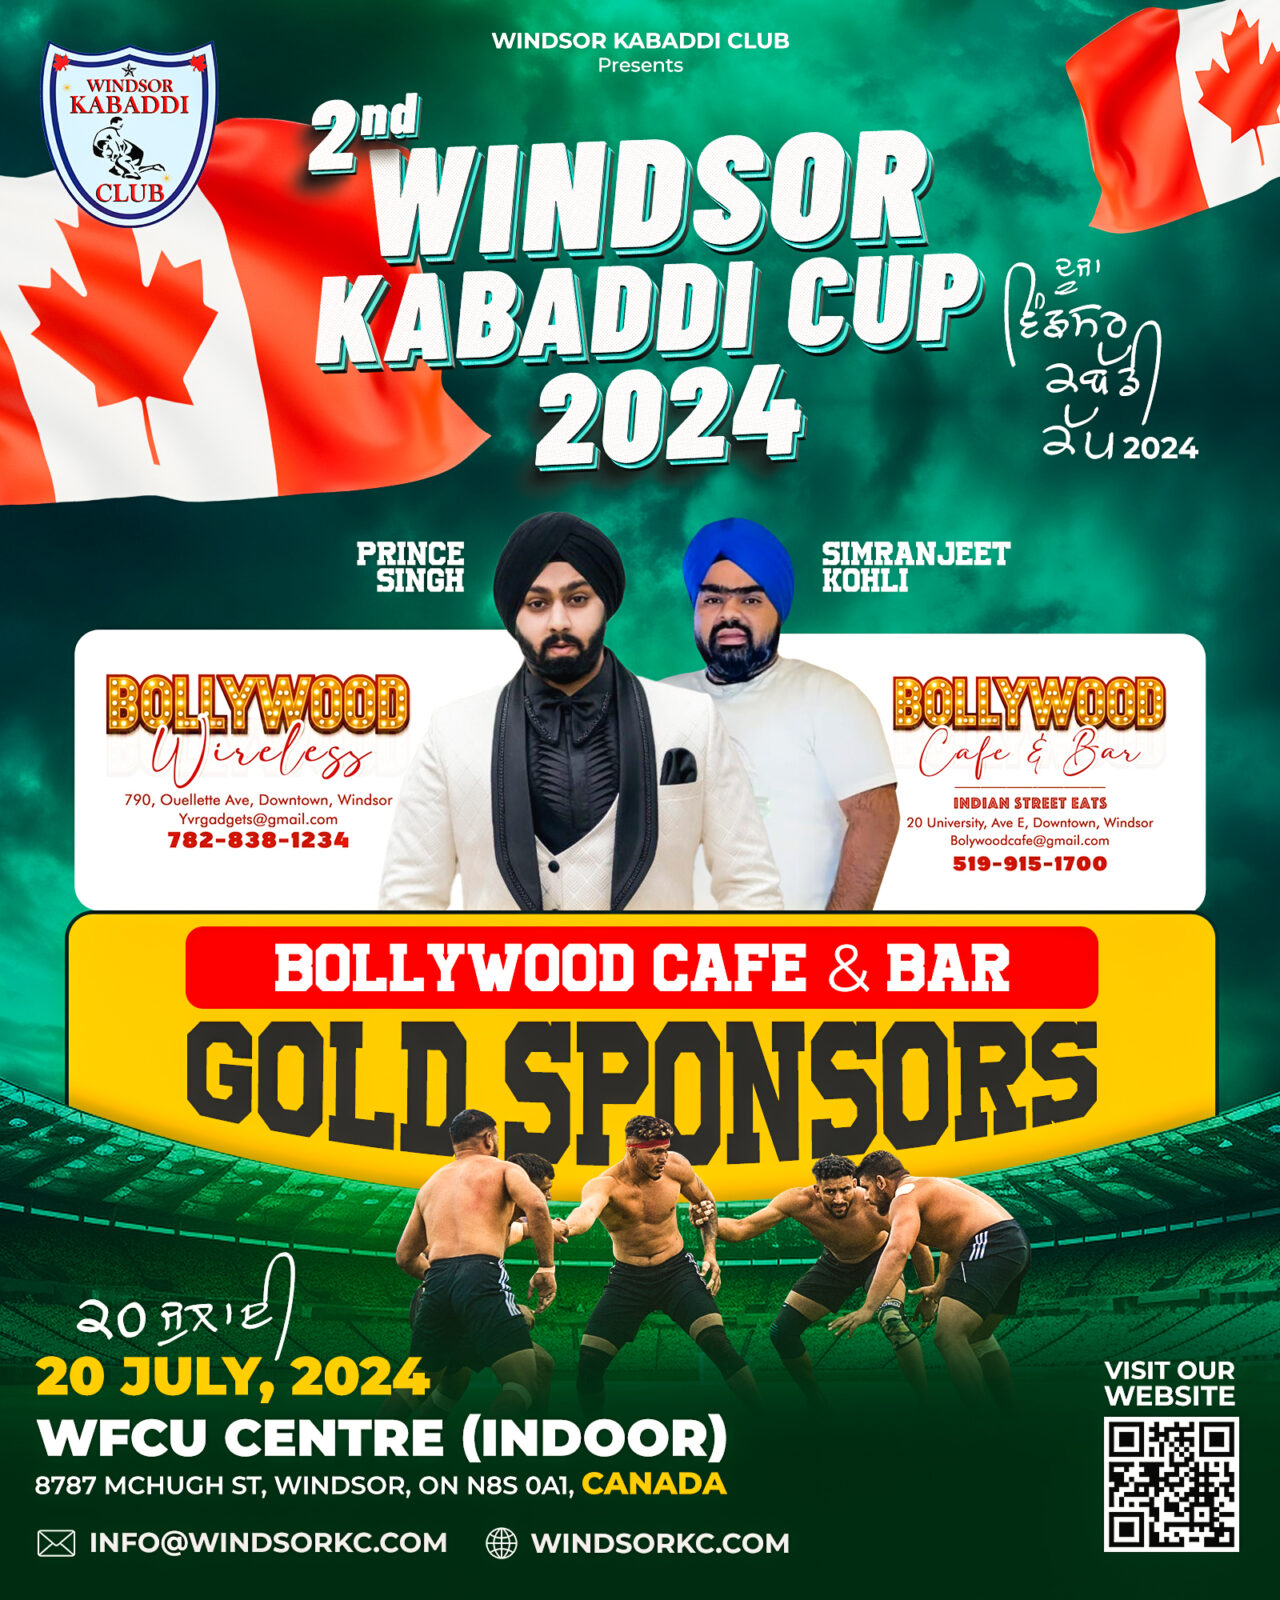 Bollywood cafe & bar Gold SPONSOR